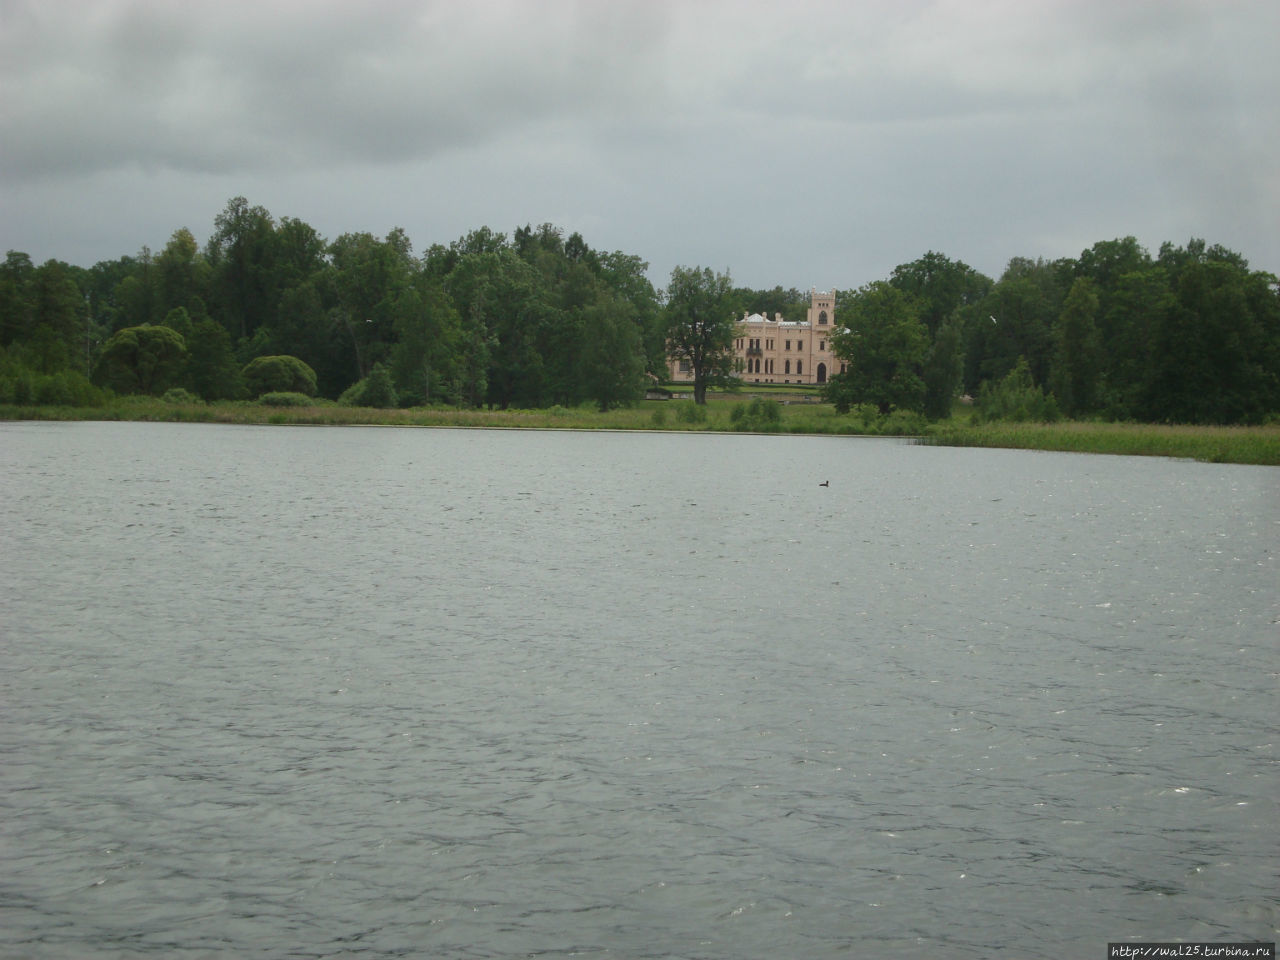 Вид на новый замок через озеро.  Возведение дворца начато в 1861 году Балвский район, Латвия